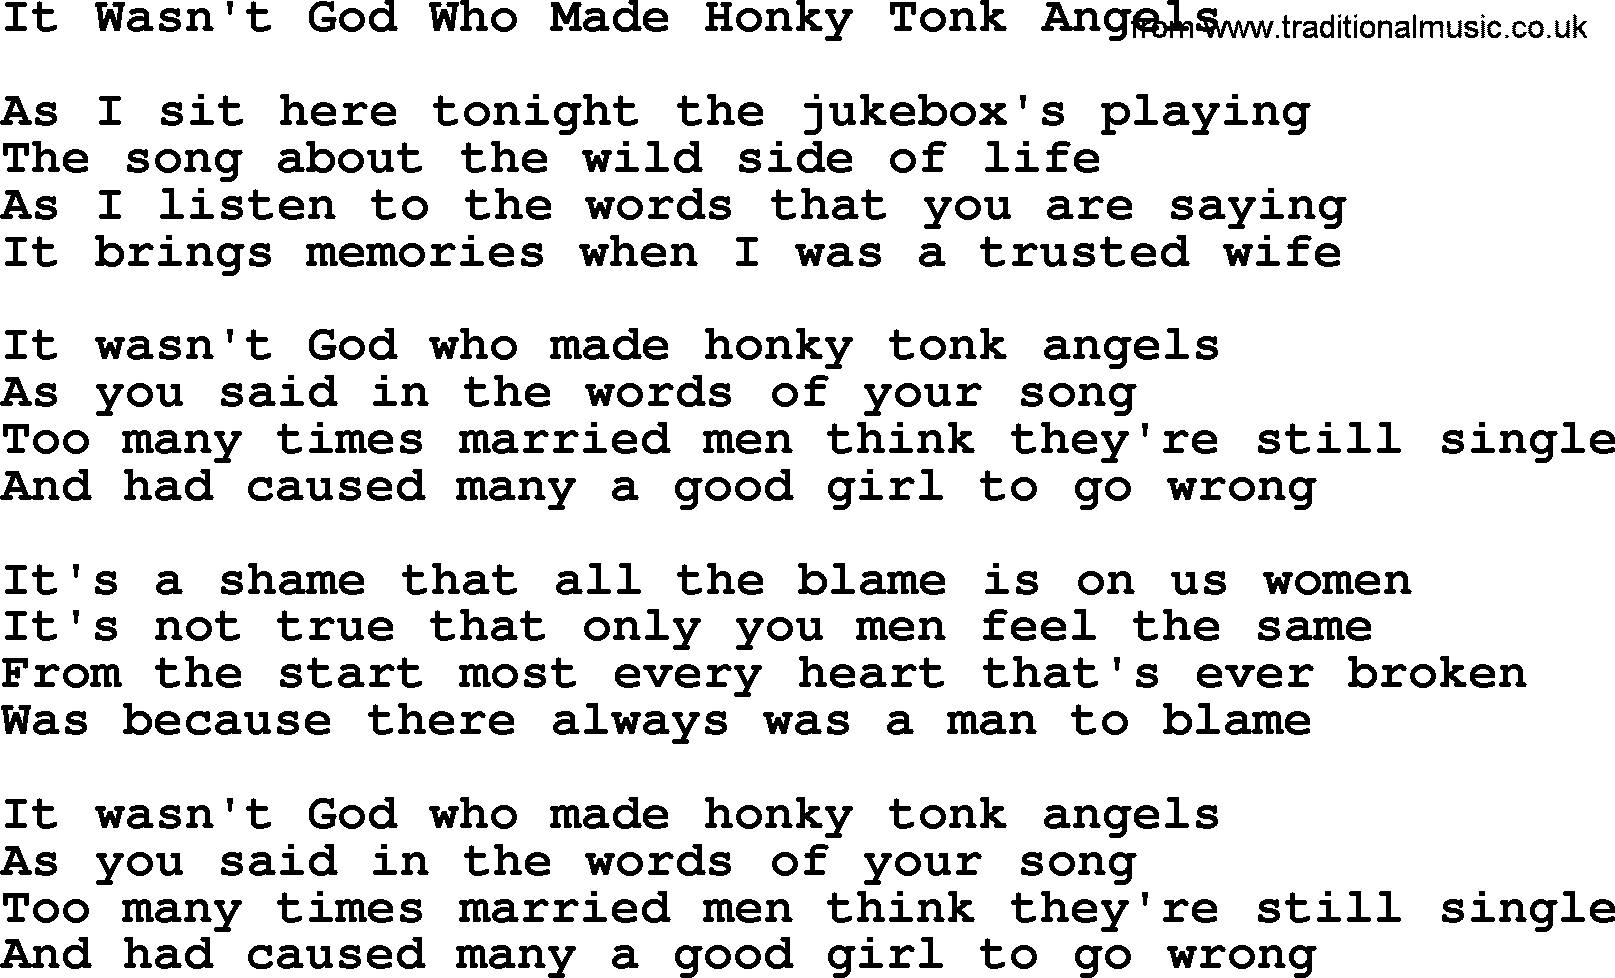 Dolly Parton song It Wasn't God Who Made Honky Tonk Angels.txt lyrics